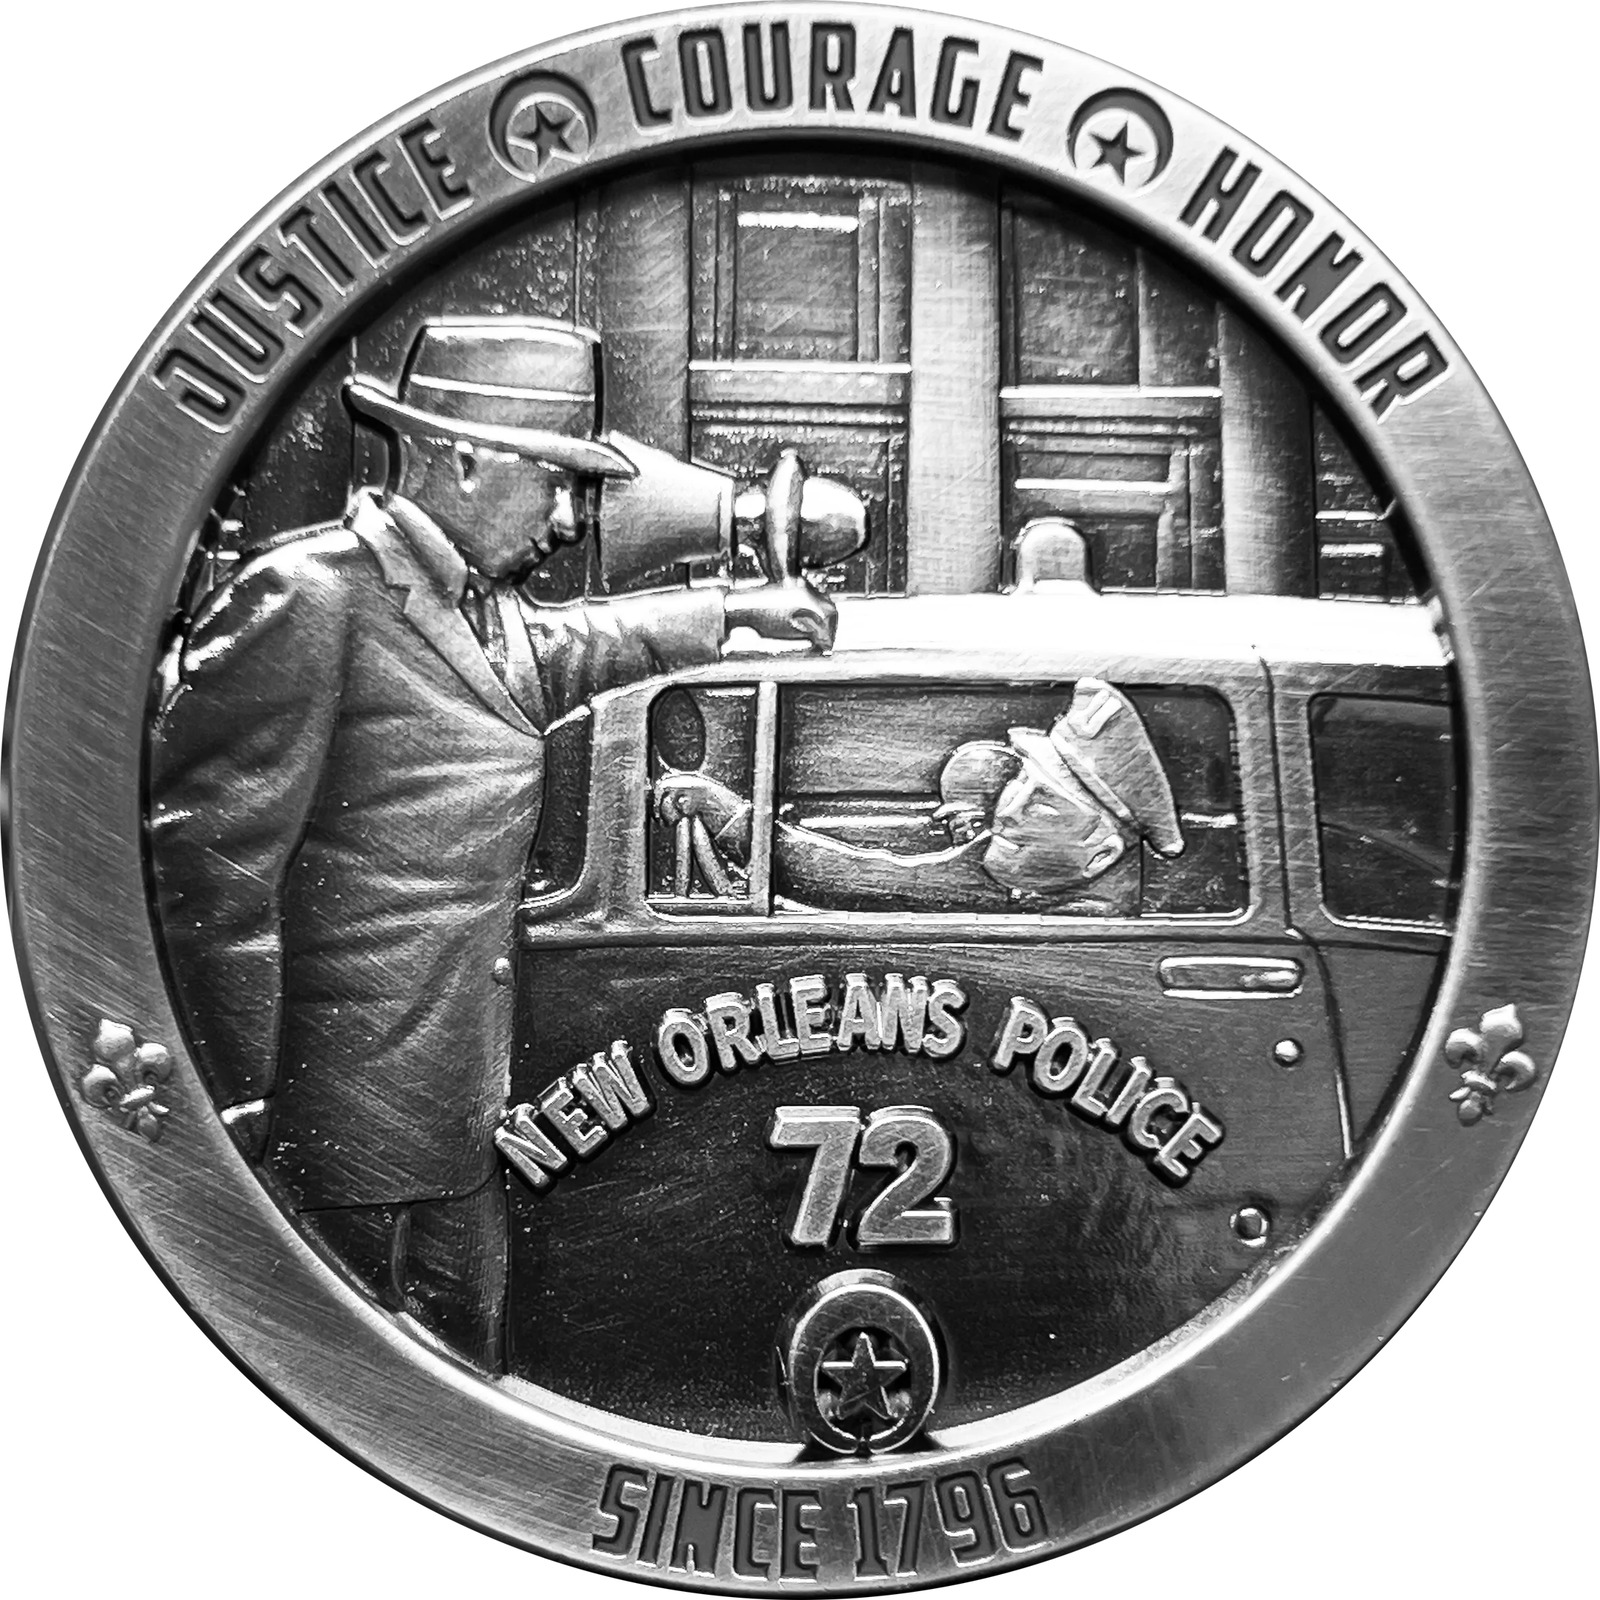 GL11-005 Vintage stye New Orleans Police Department Challenge Coin NOLA NOPD